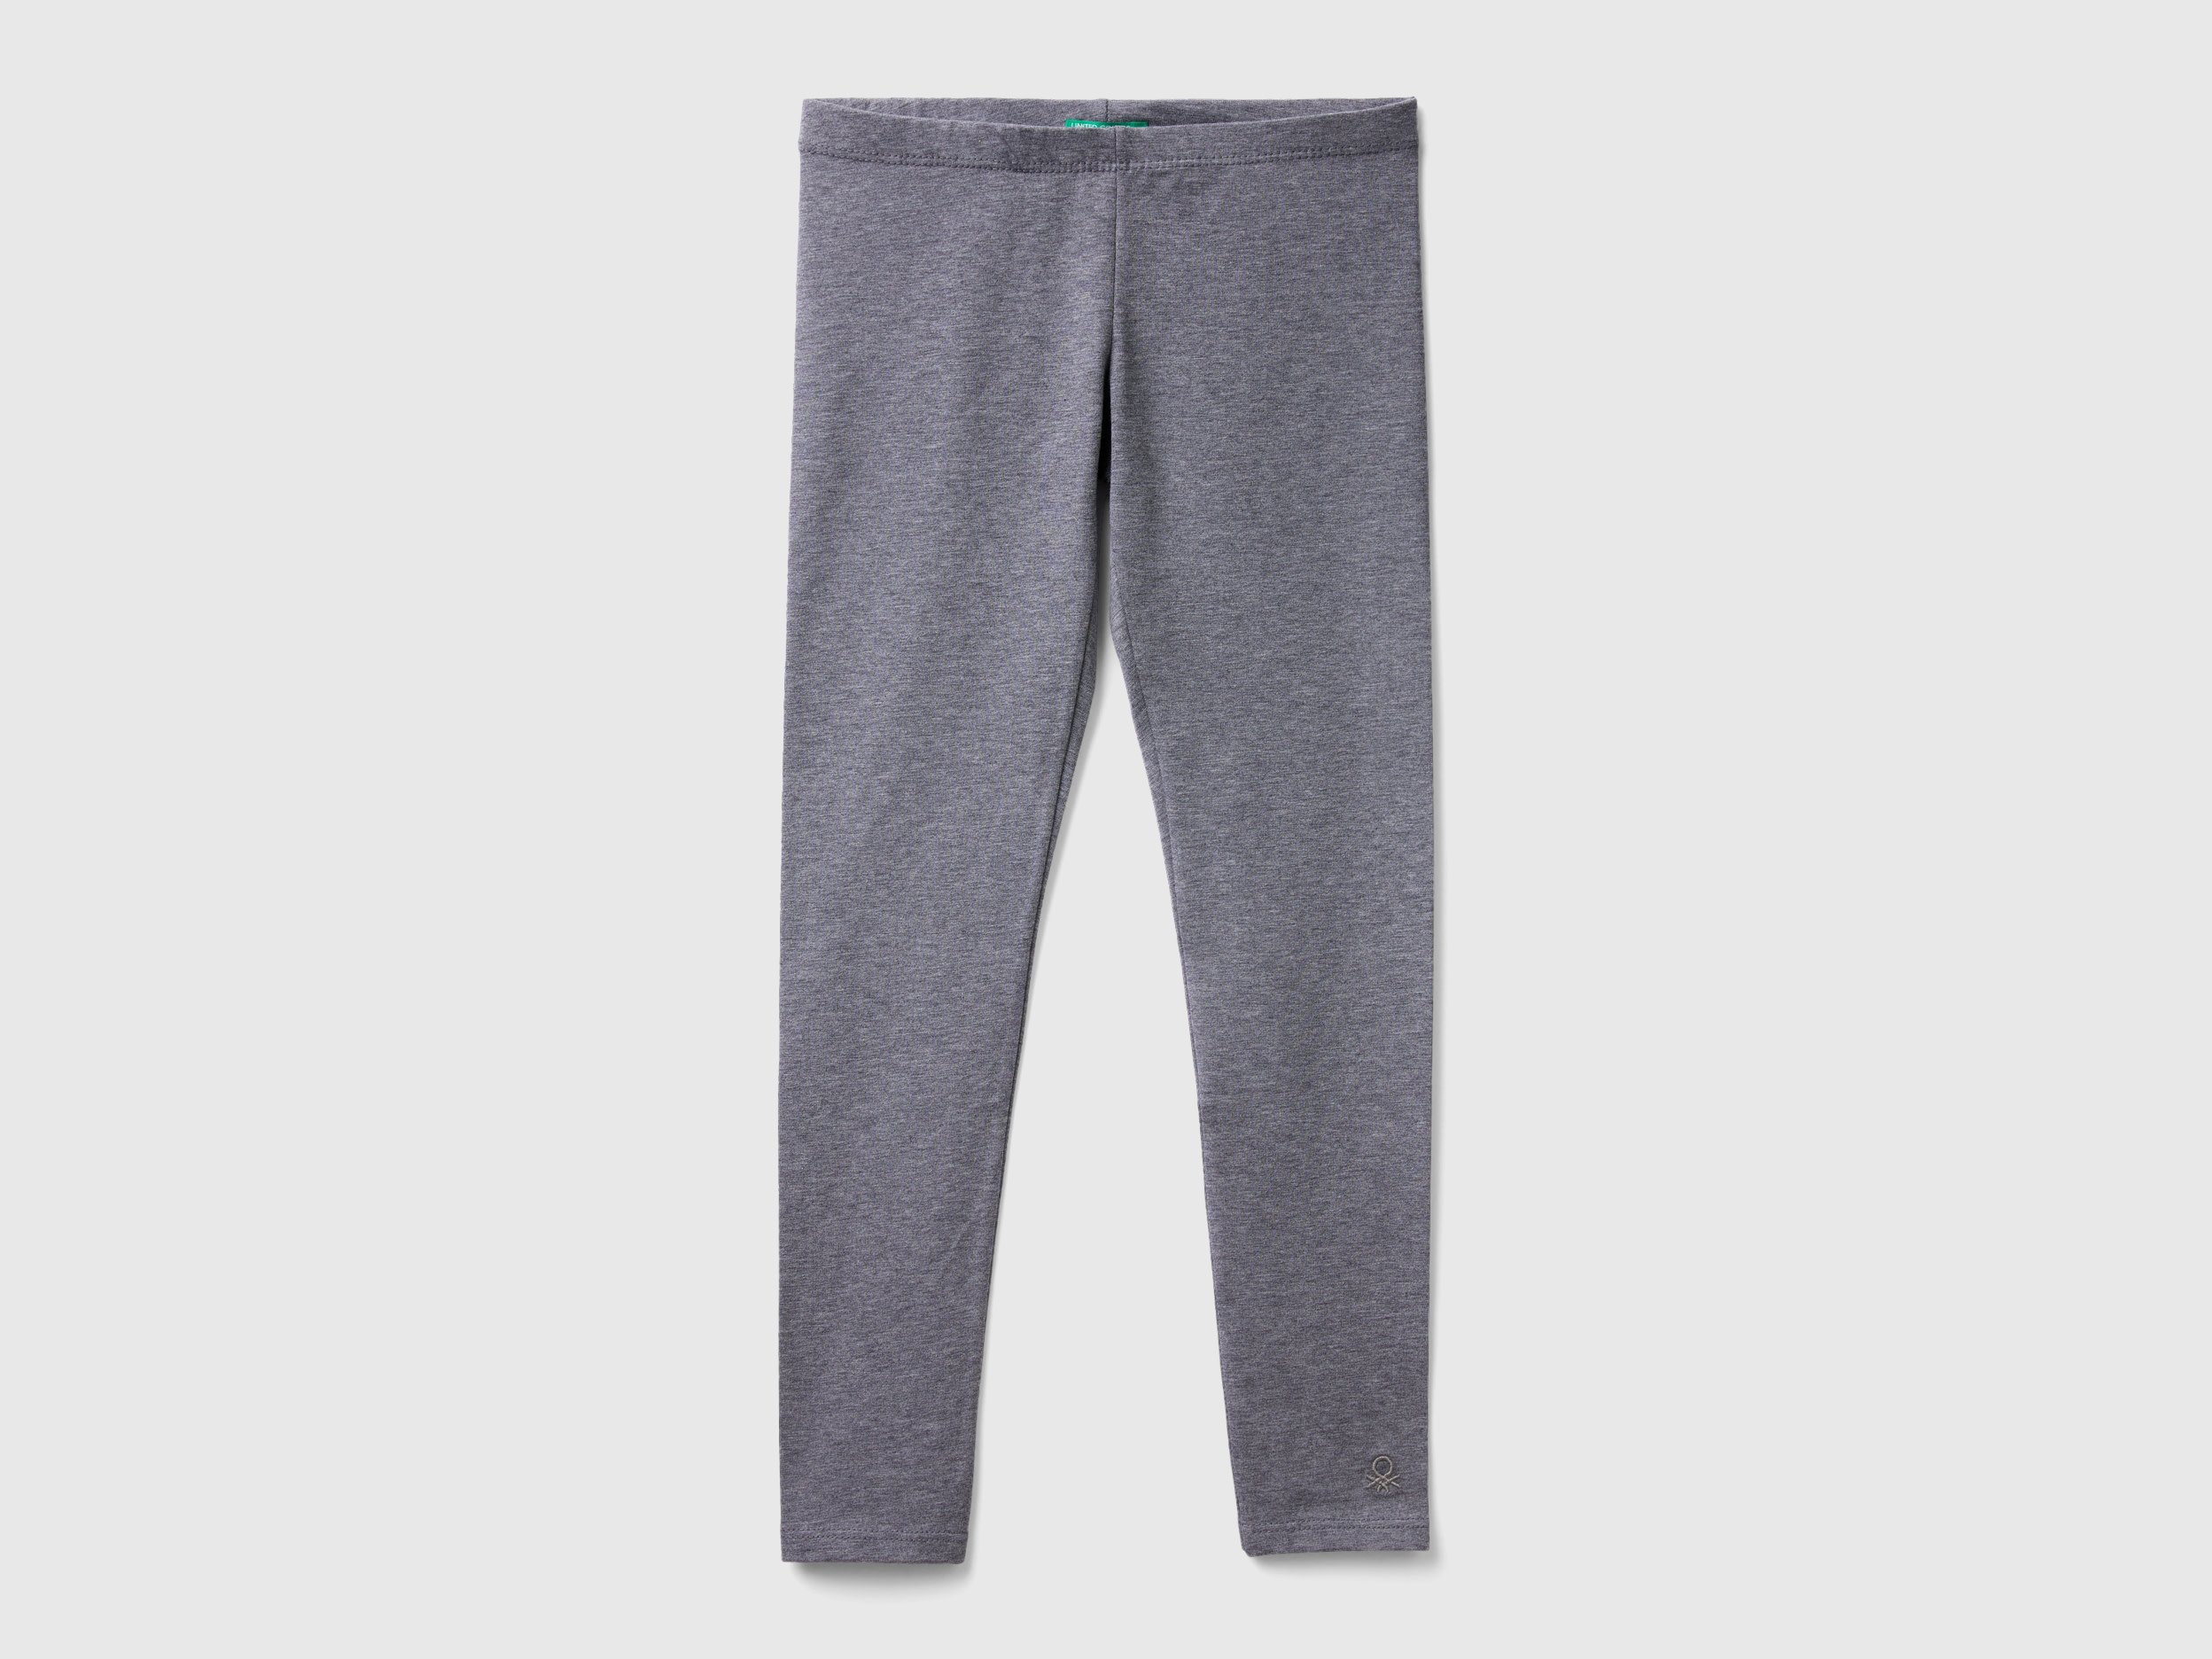 Benetton, Leggings In Stretch Cotton With Logo, size XL, Dark Gray, Kids